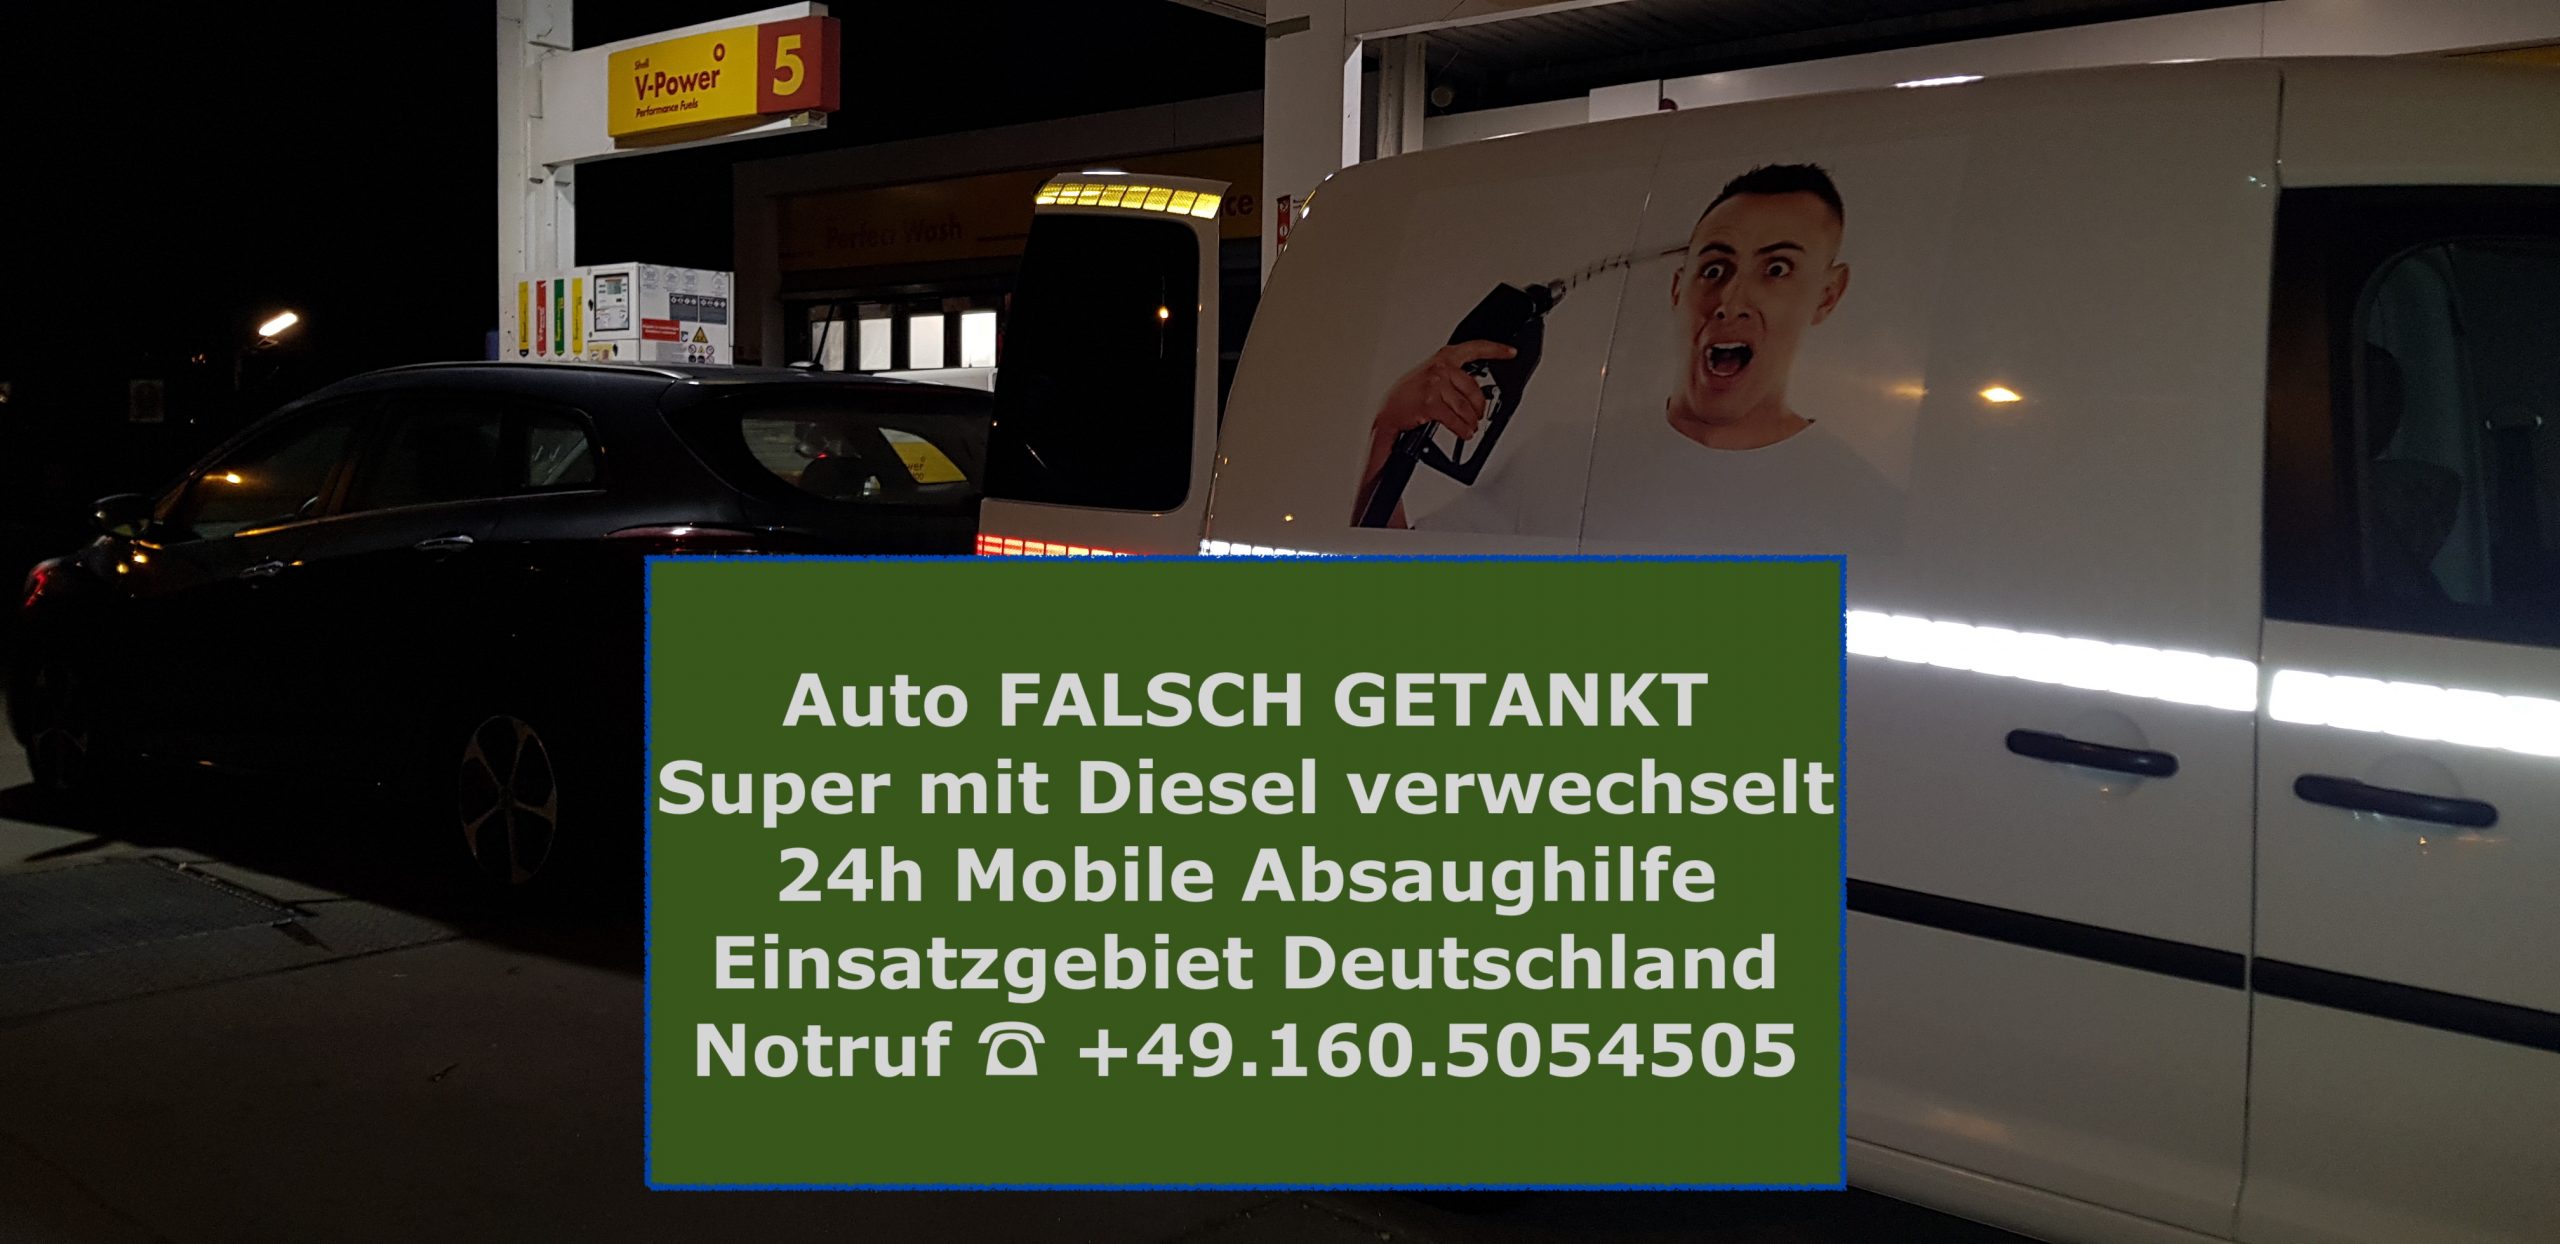 Falsch-tanker-München-Deutschland-Hilfe-24h-01605054505-www.falschtanken24.de